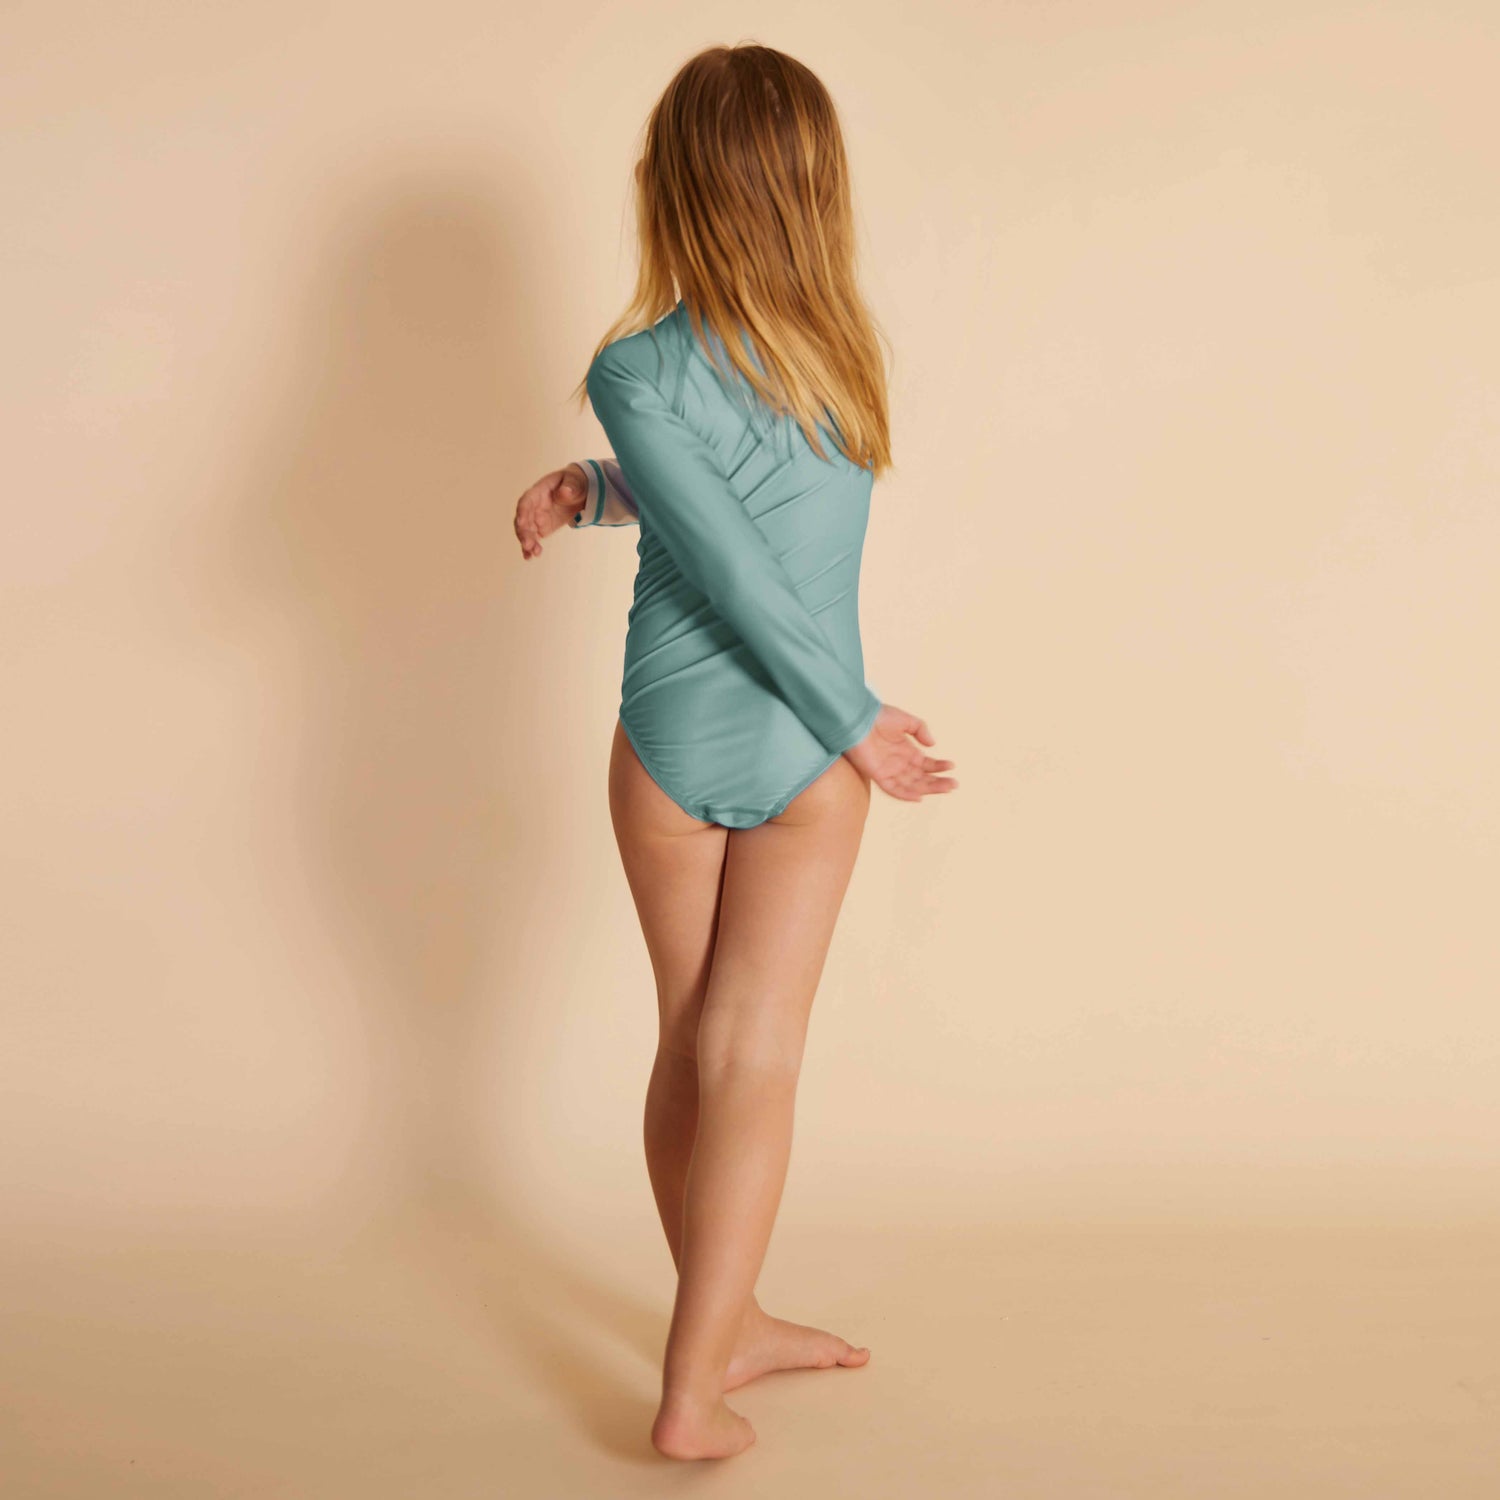 Malie Matcha UV Swimsuit